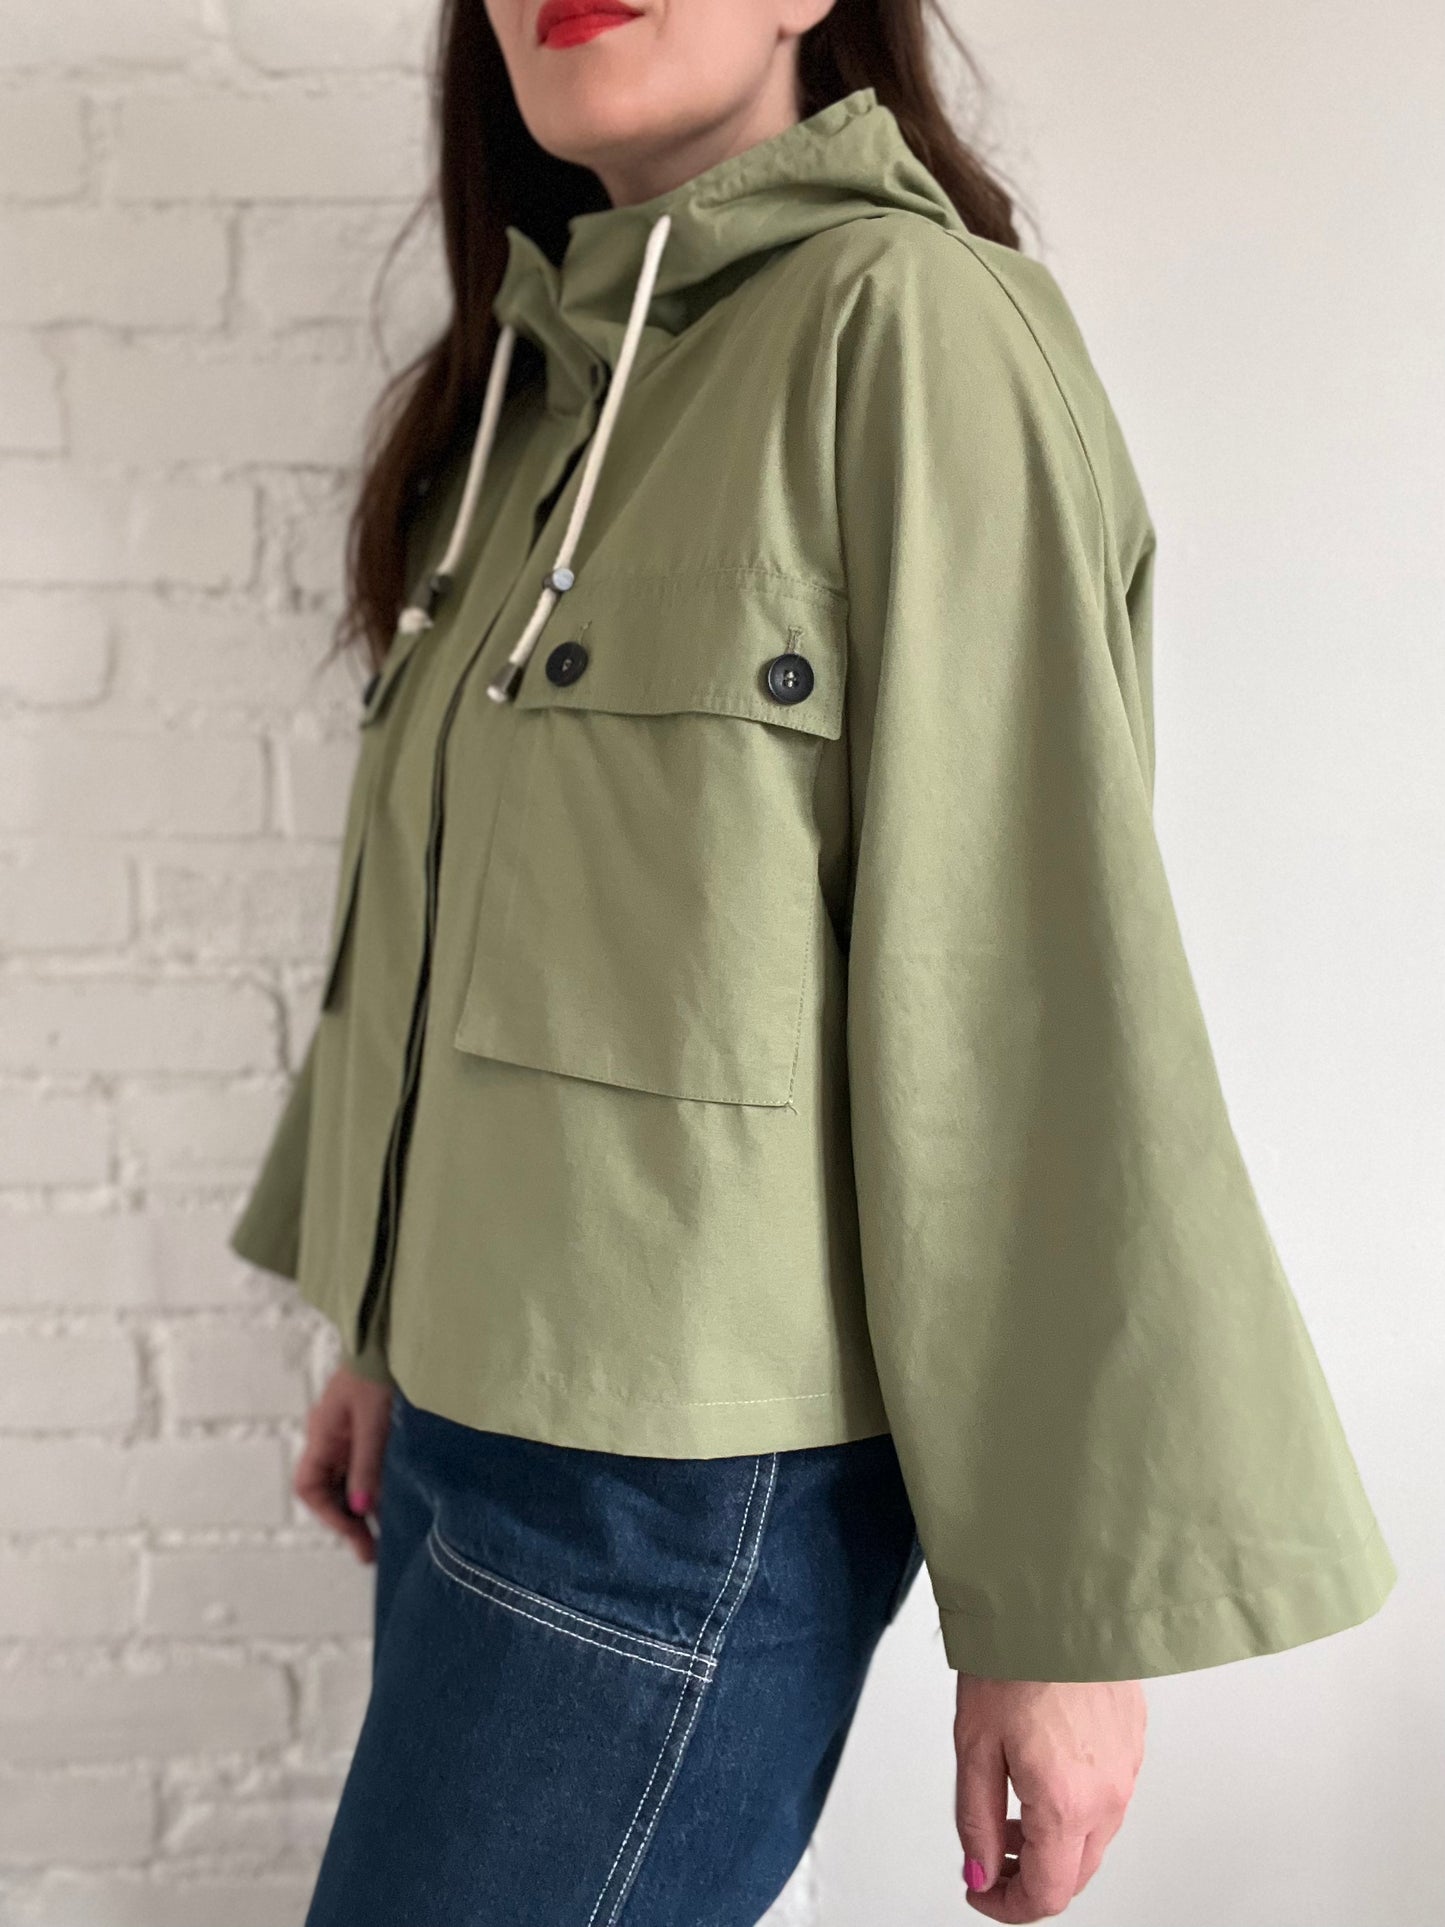 Boxy Olive Rain Jacket - XL